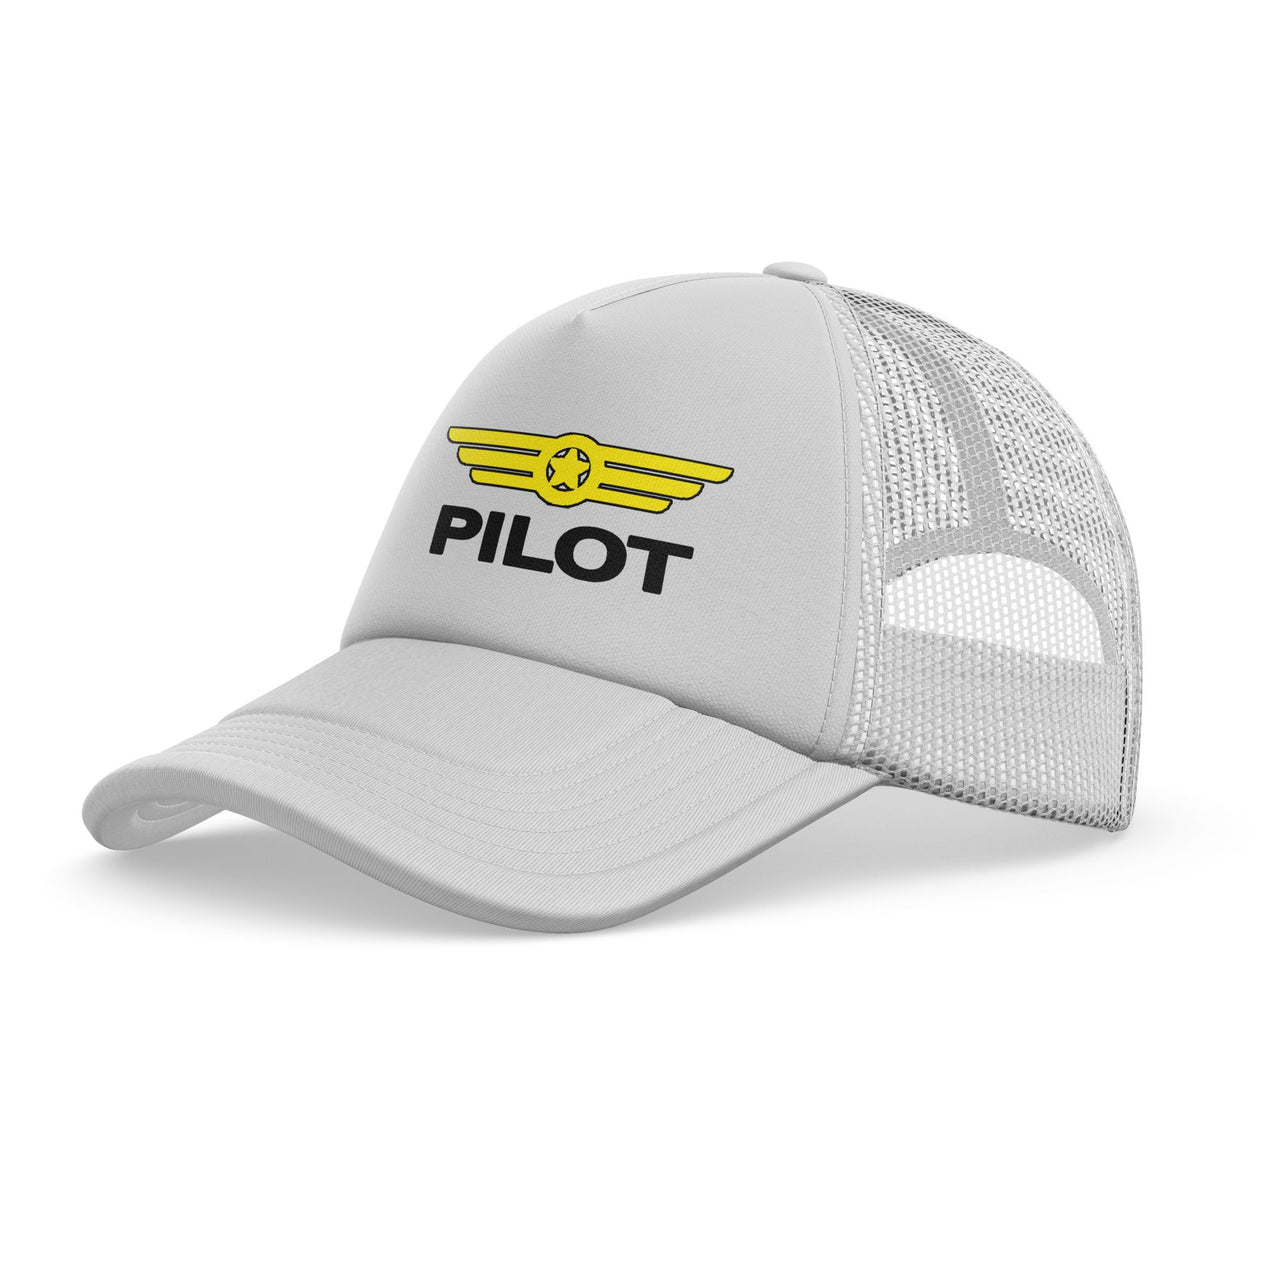 Pilot & Badge Designed Trucker Caps & Hats